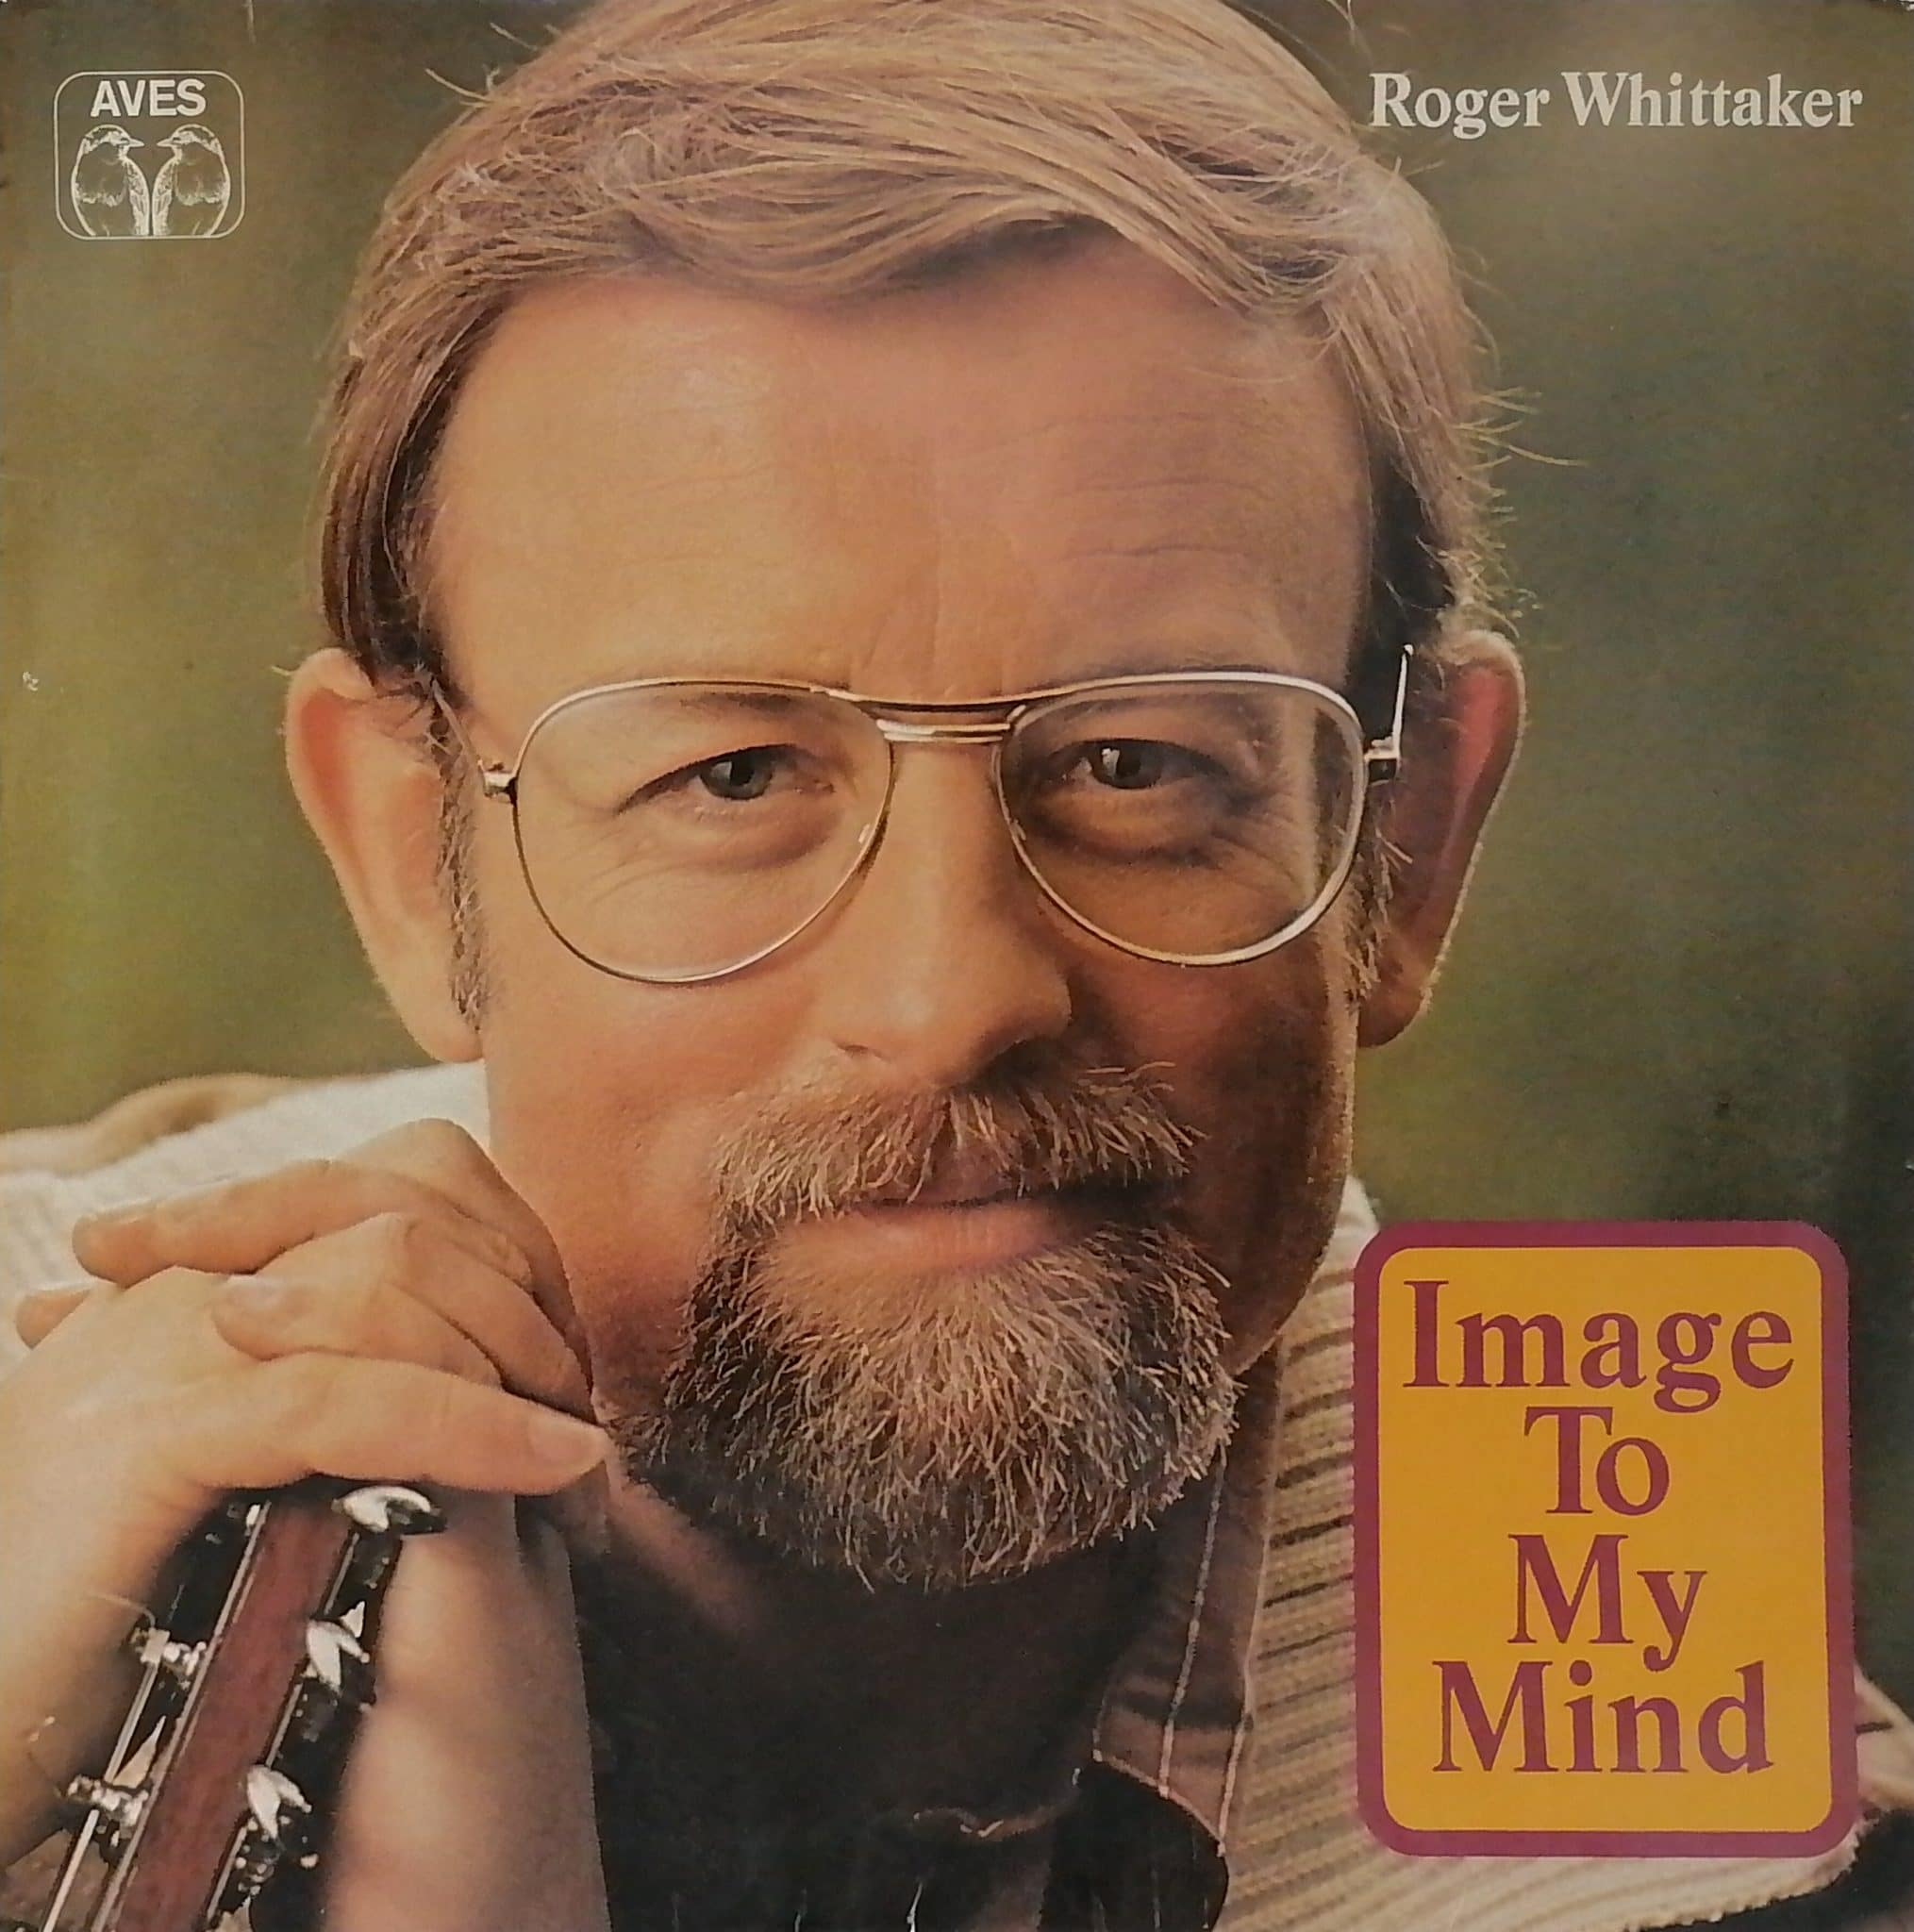 Gramofonska ploča Roger Whittaker Image To My Mind  69.047